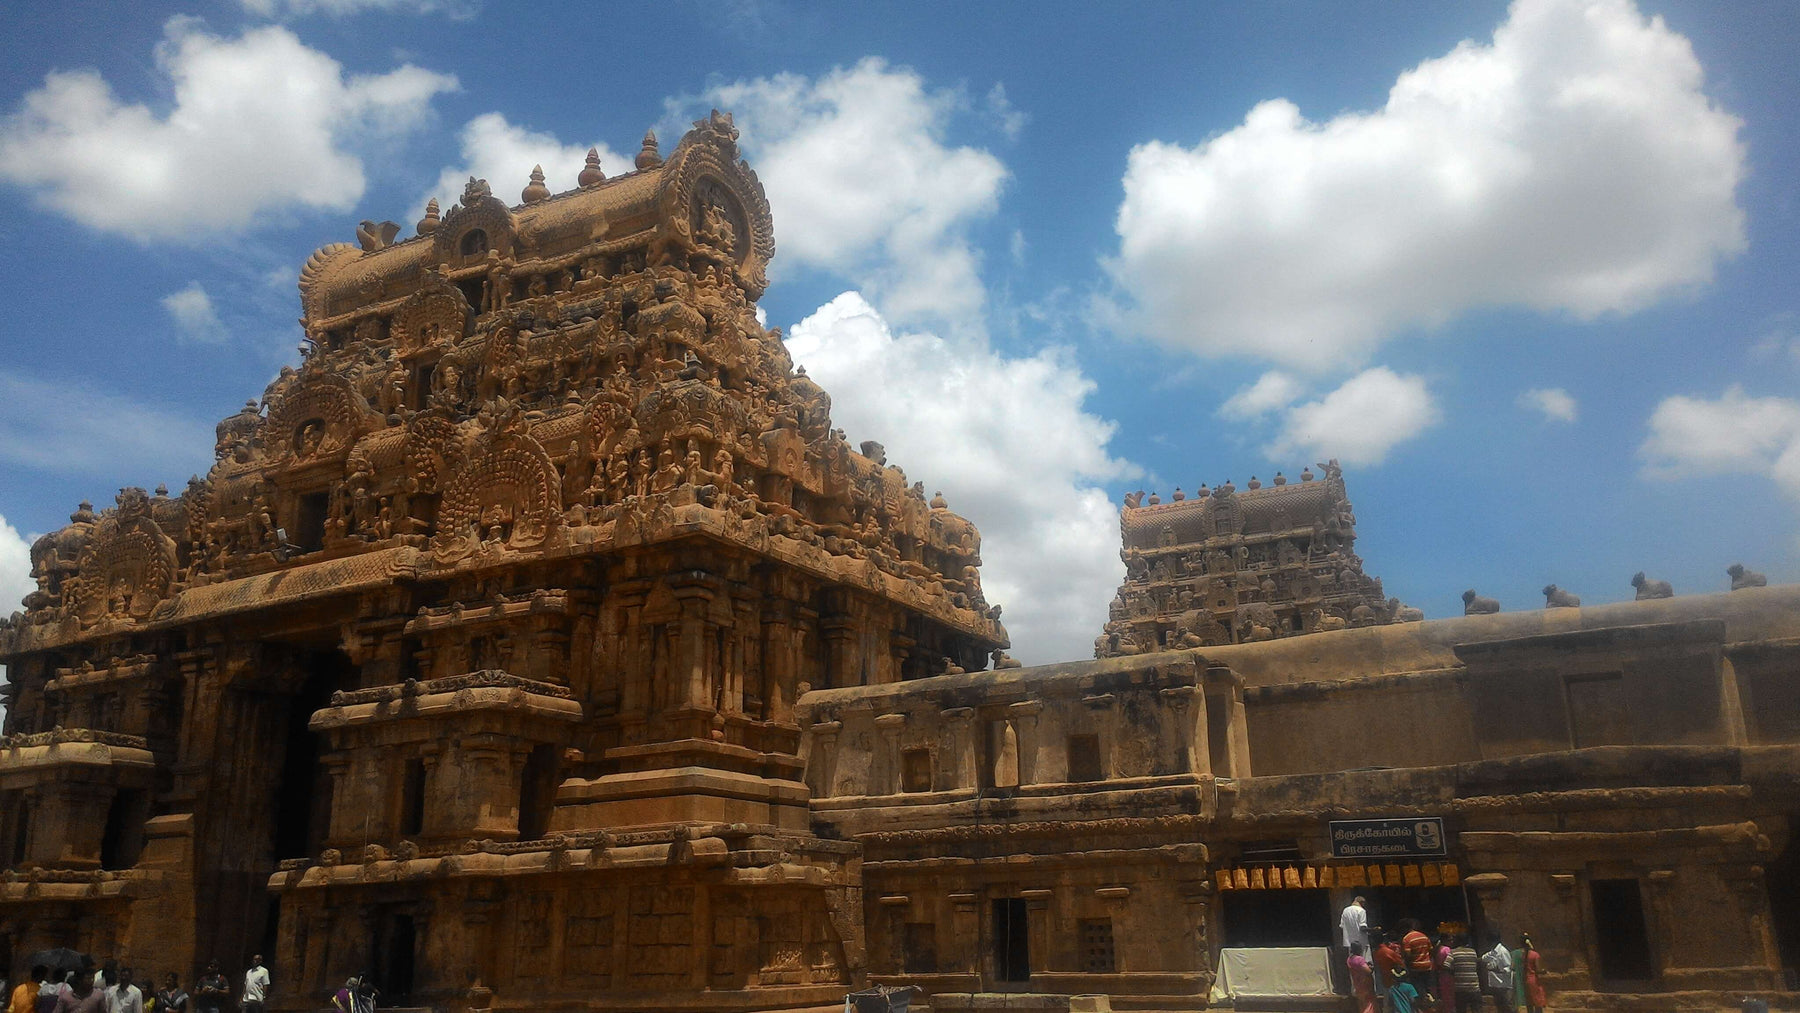 The Brihadeesvara Temple, a supreme example of Chola architecture